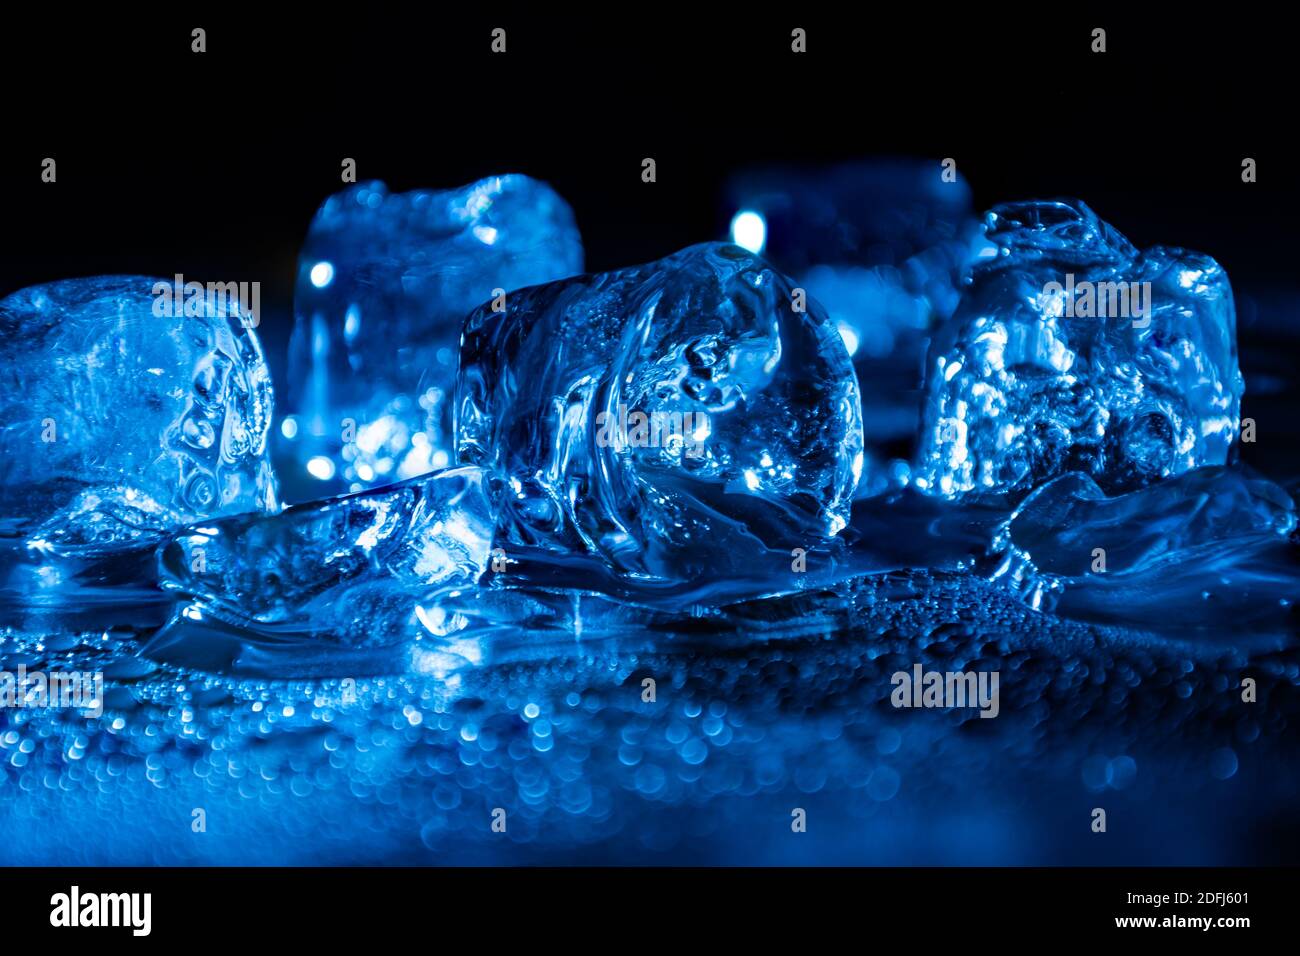 https://c8.alamy.com/comp/2DFJ601/melting-frozen-ice-cubes-illuminated-with-blue-coloured-led-light-in-the-dark-2DFJ601.jpg